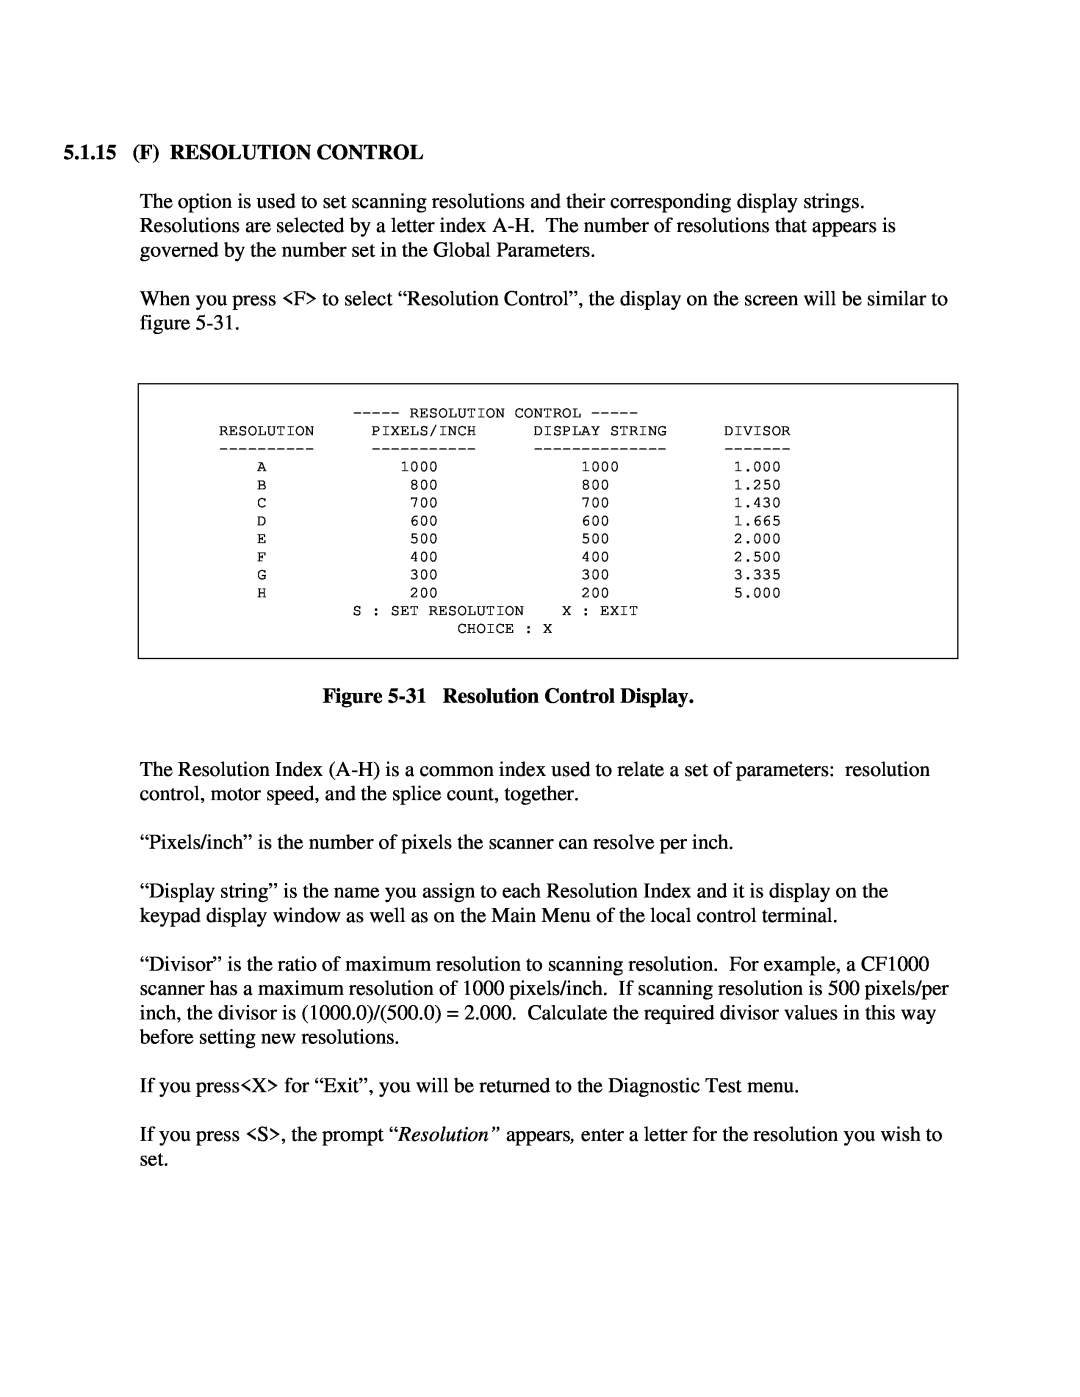 IBM CF Series manual F Resolution Control, 31 Resolution Control Display 